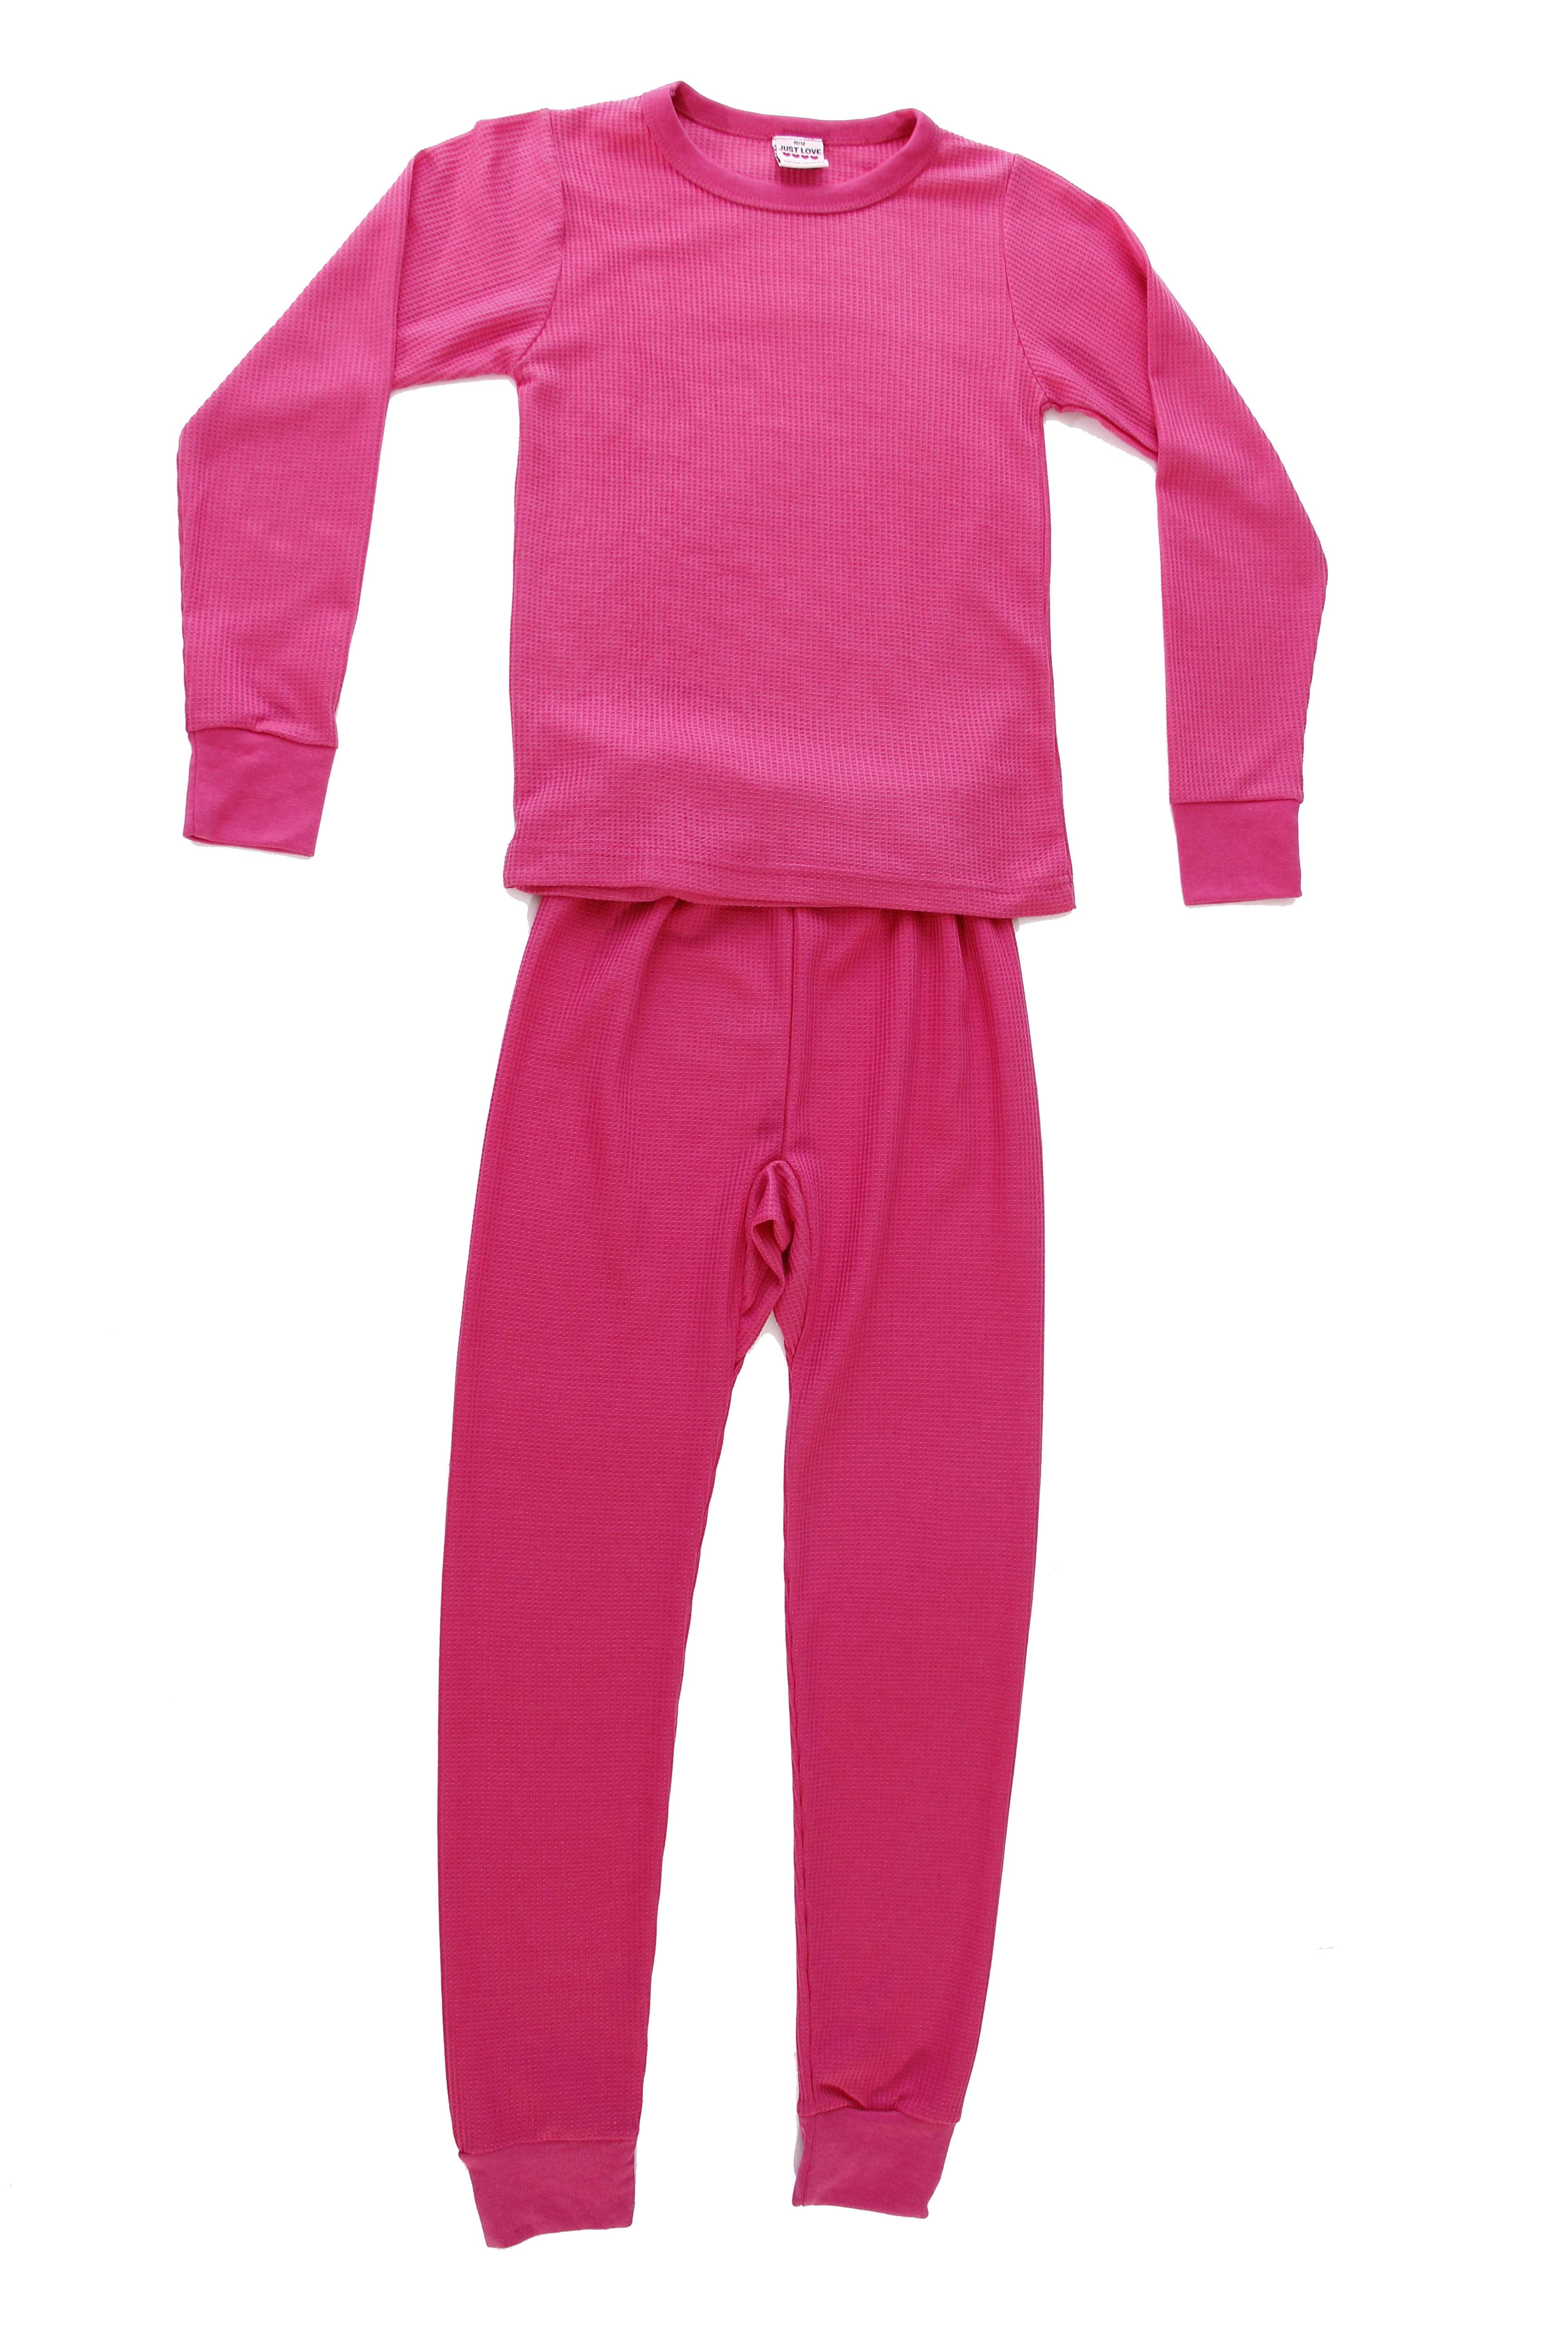 Elowel Thermal Underwear Set for Girls Kids Thermals Base Layer Large Light  Pink